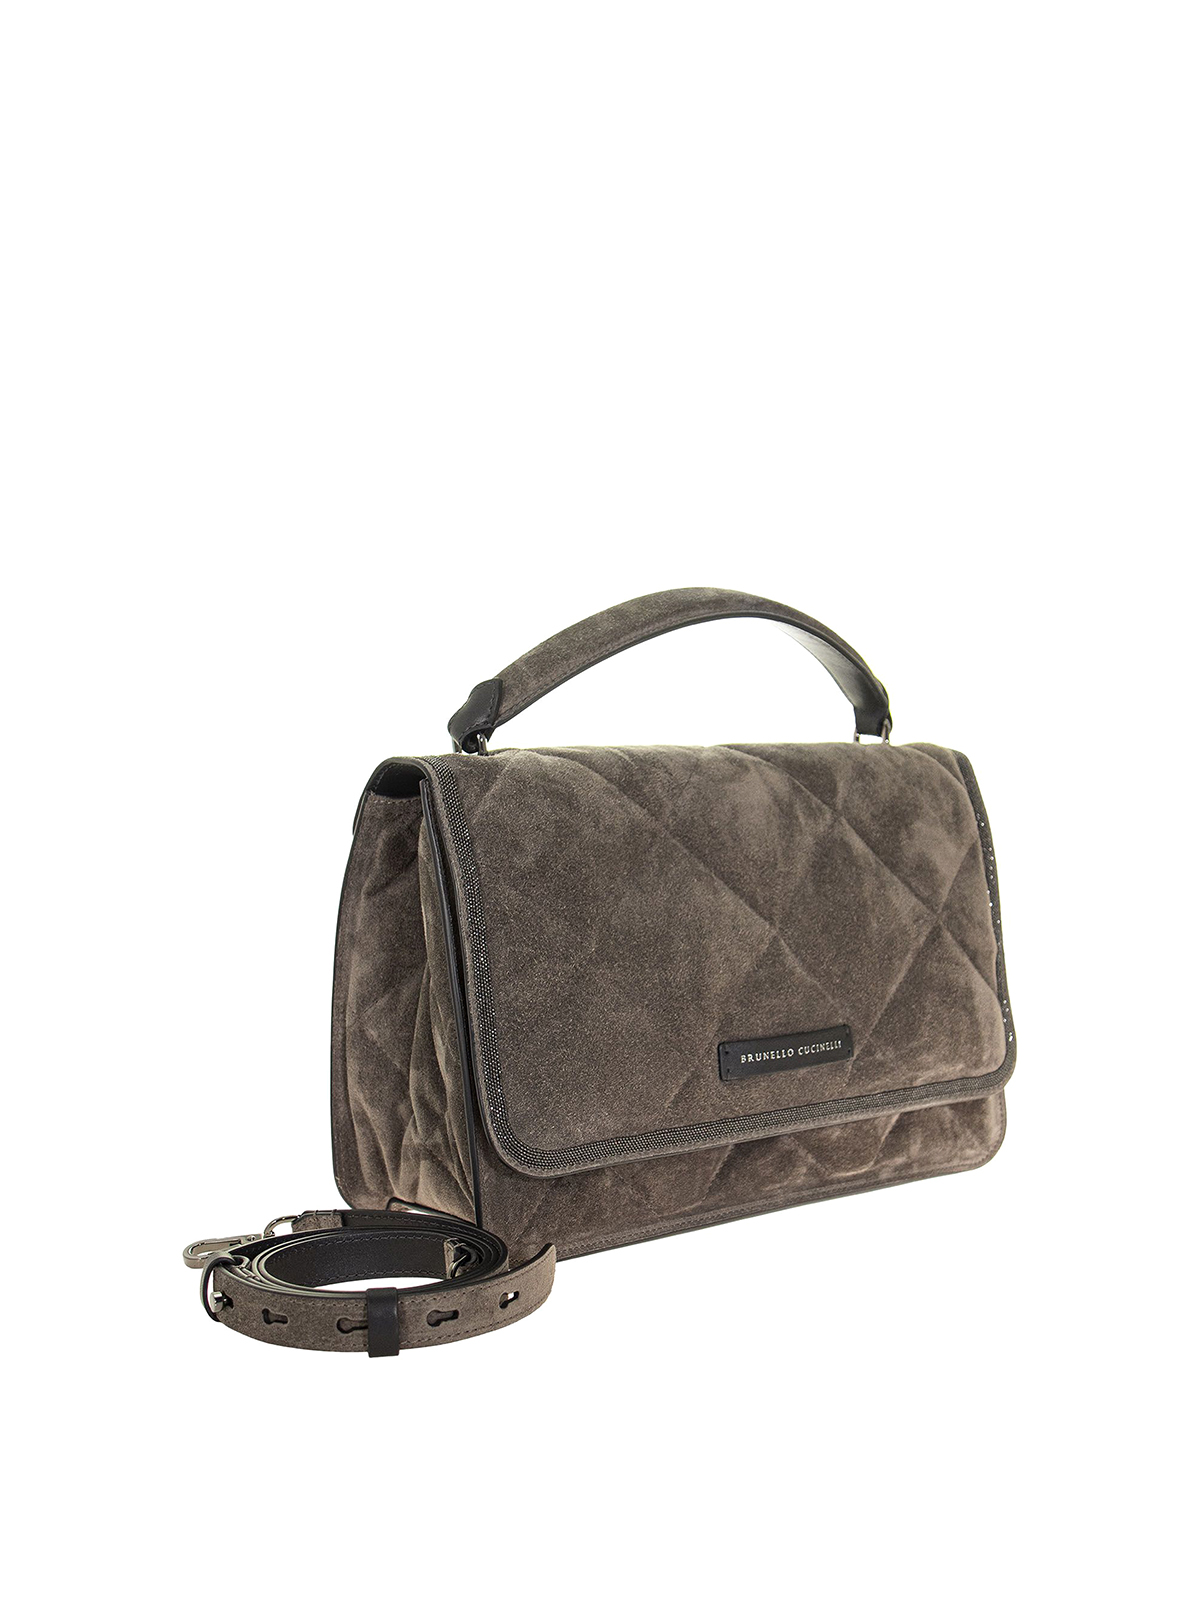 Embellished Suede Bucket Bag in Brown - Brunello Cucinelli